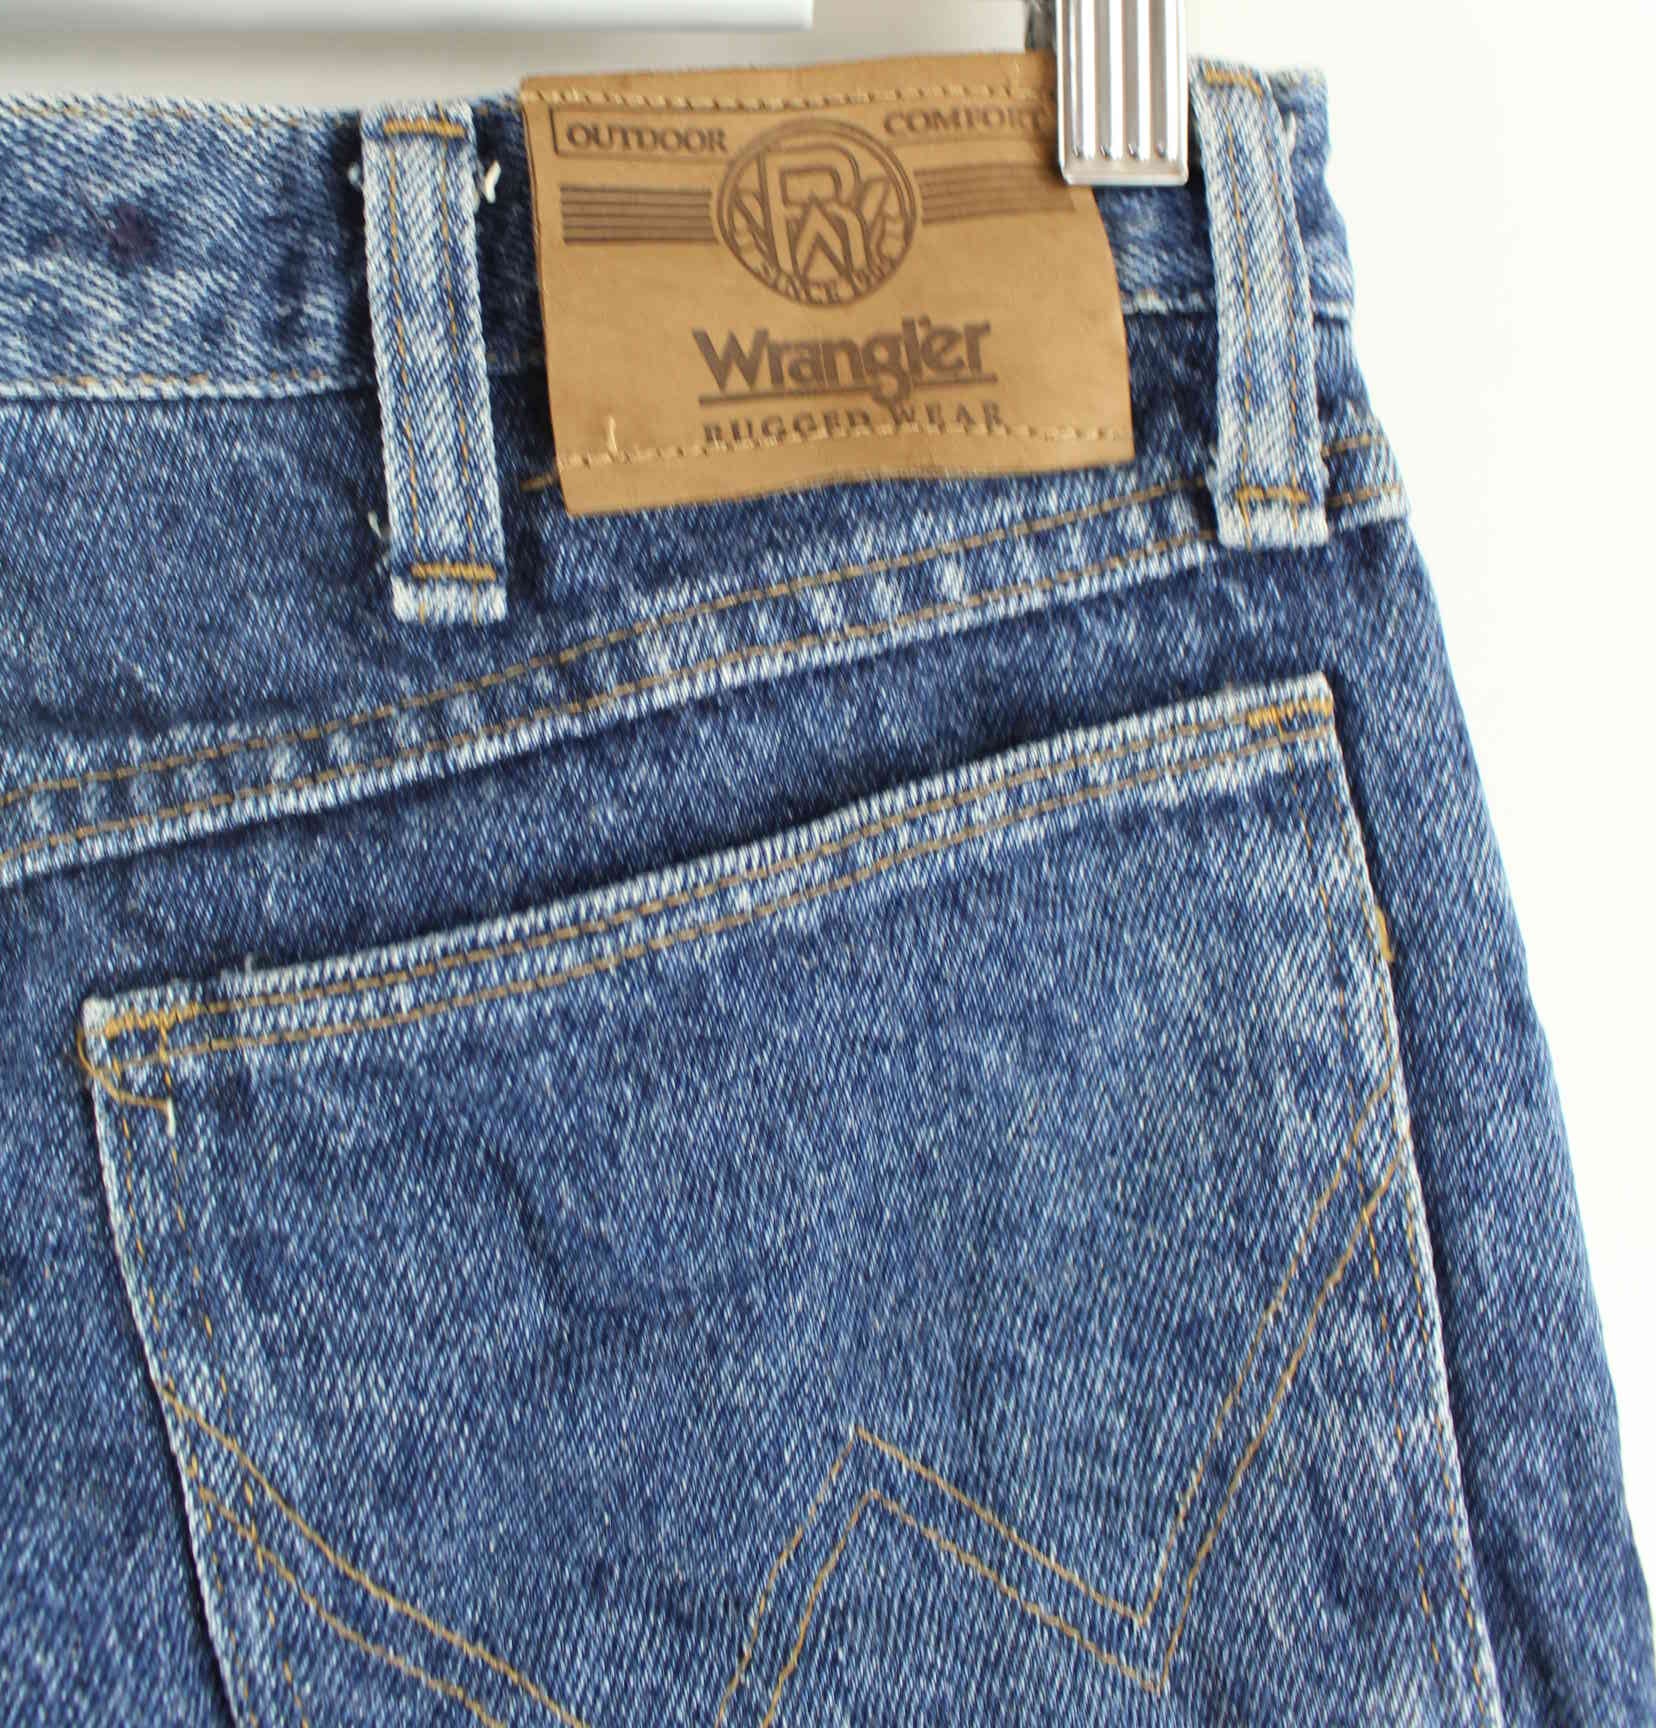 Wrangler Rugged Wear Jeans Blau W30 L32 (detail image 5)